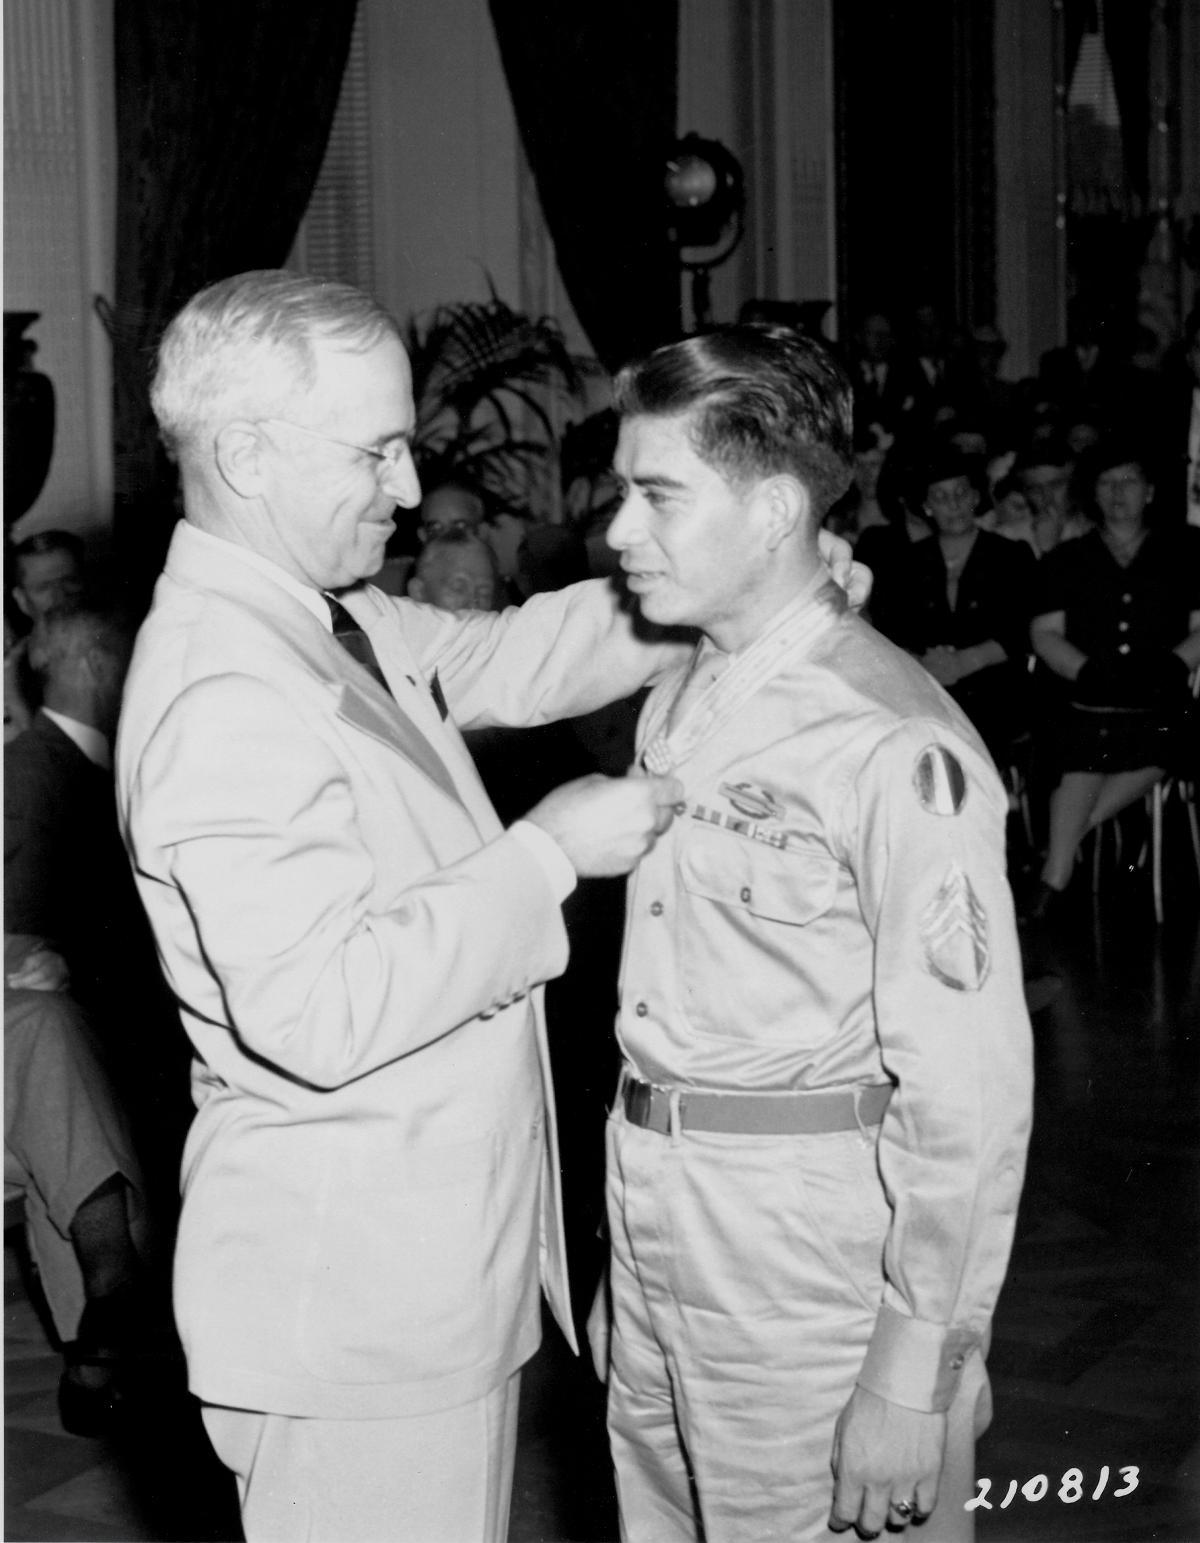 President Truman places the medal around Garcia's neck